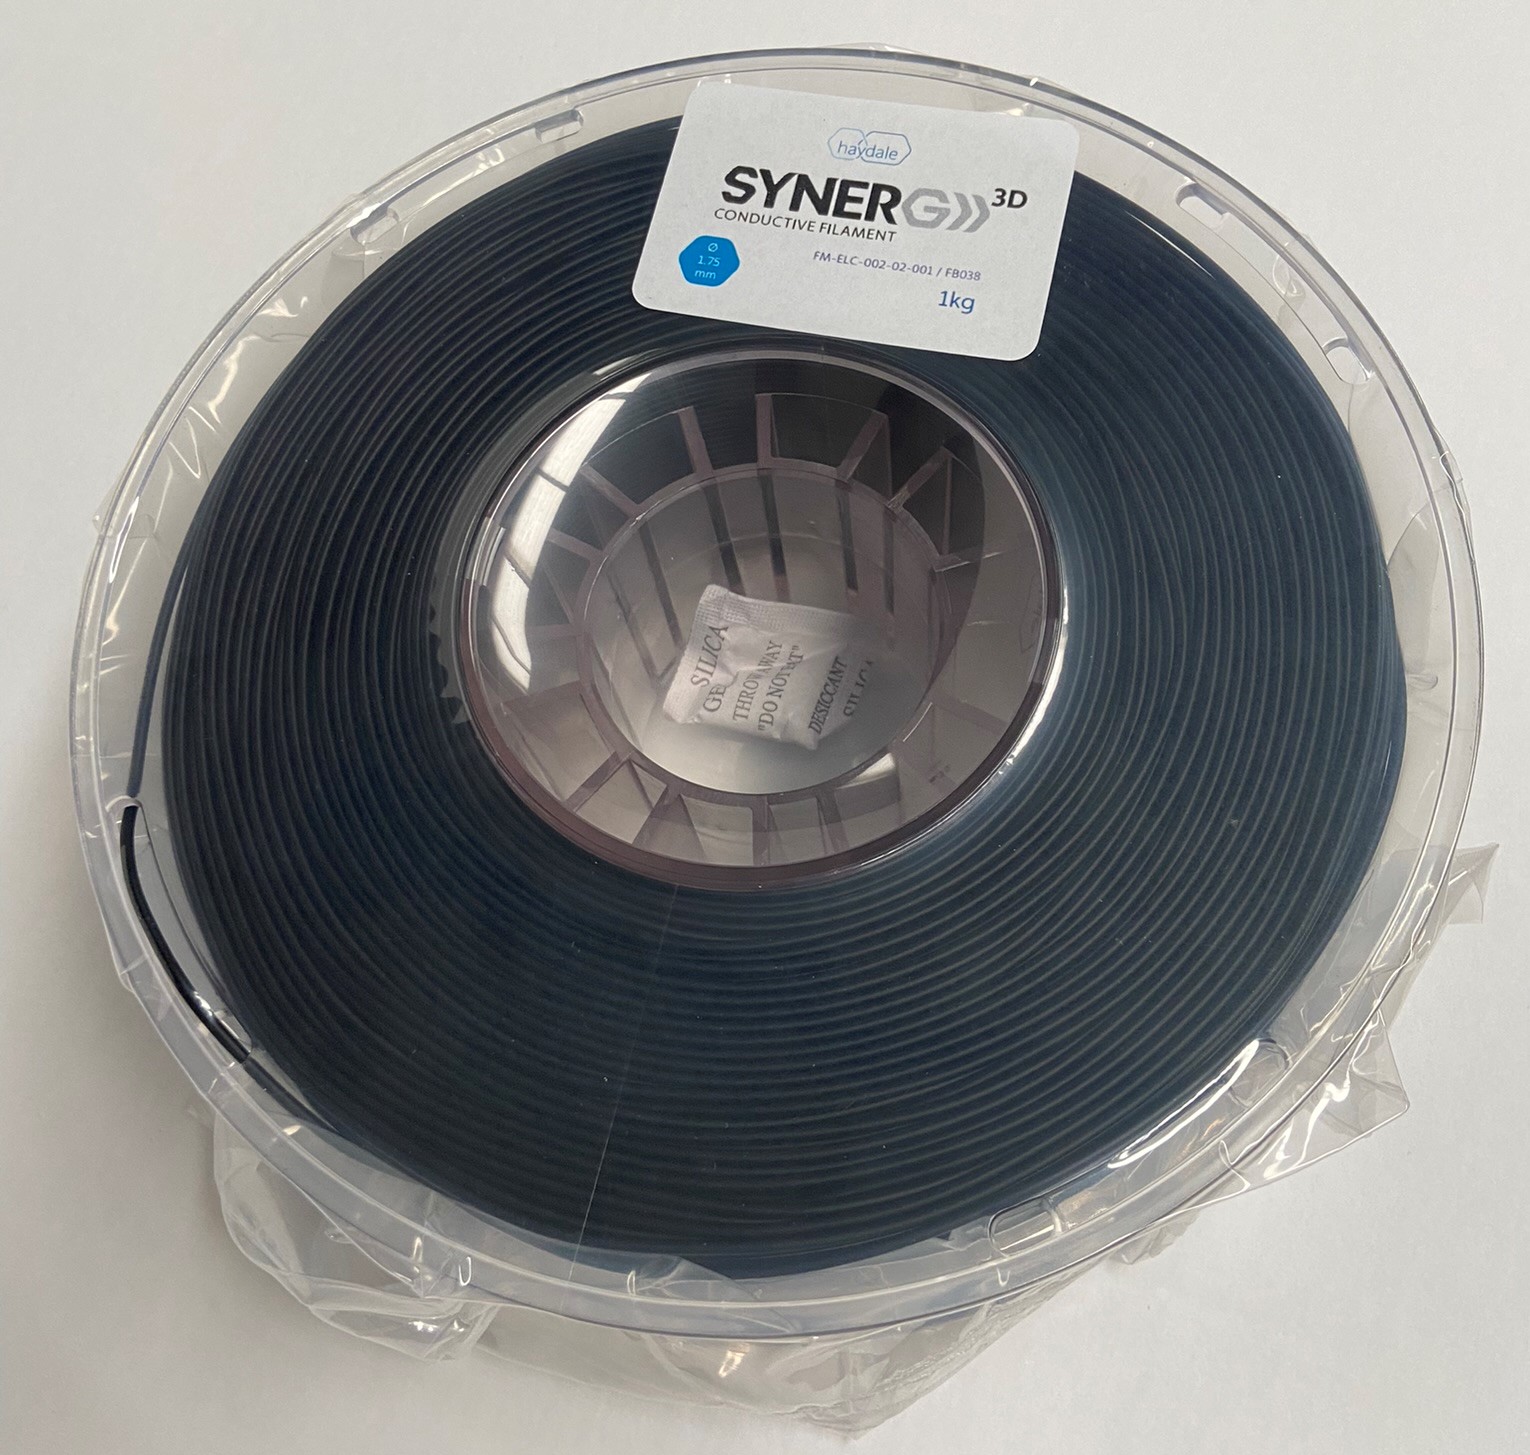 Haydale SynerG 3D Conductive PLA Filament 1.75mm 1KG